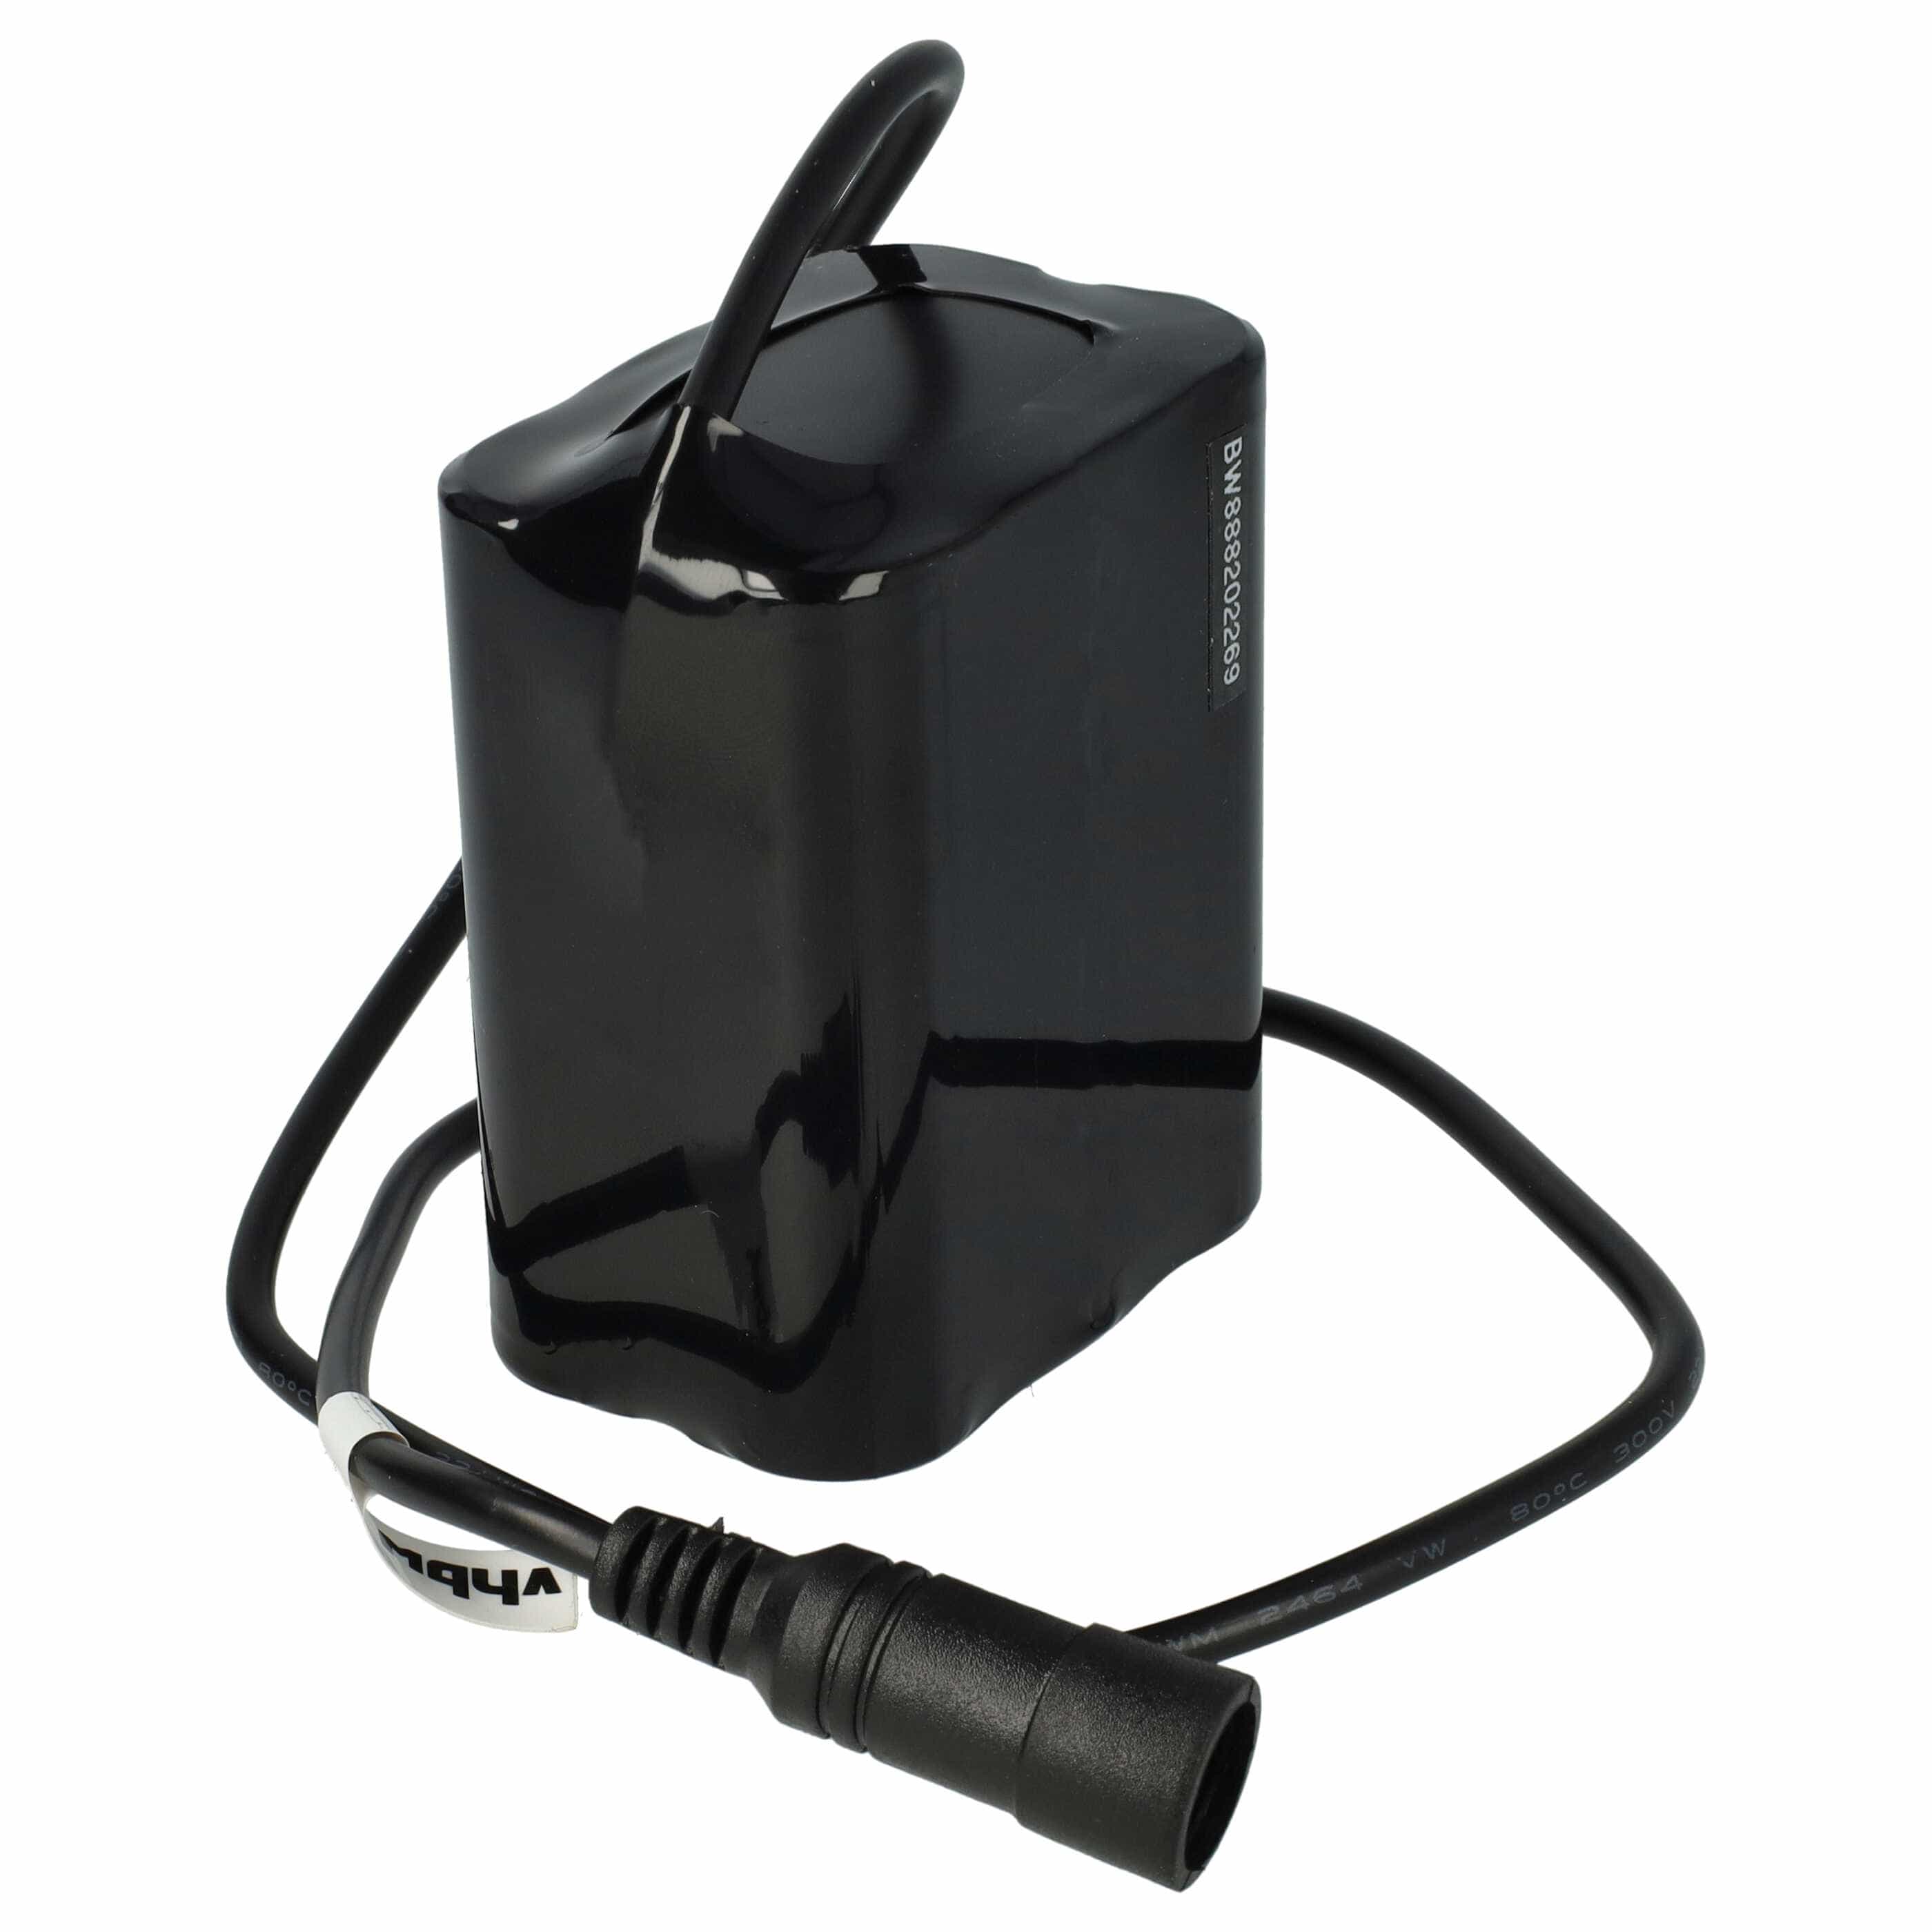 Li-Ion-battery pack- 7800mAh 8.4V - for bicycle lamp light